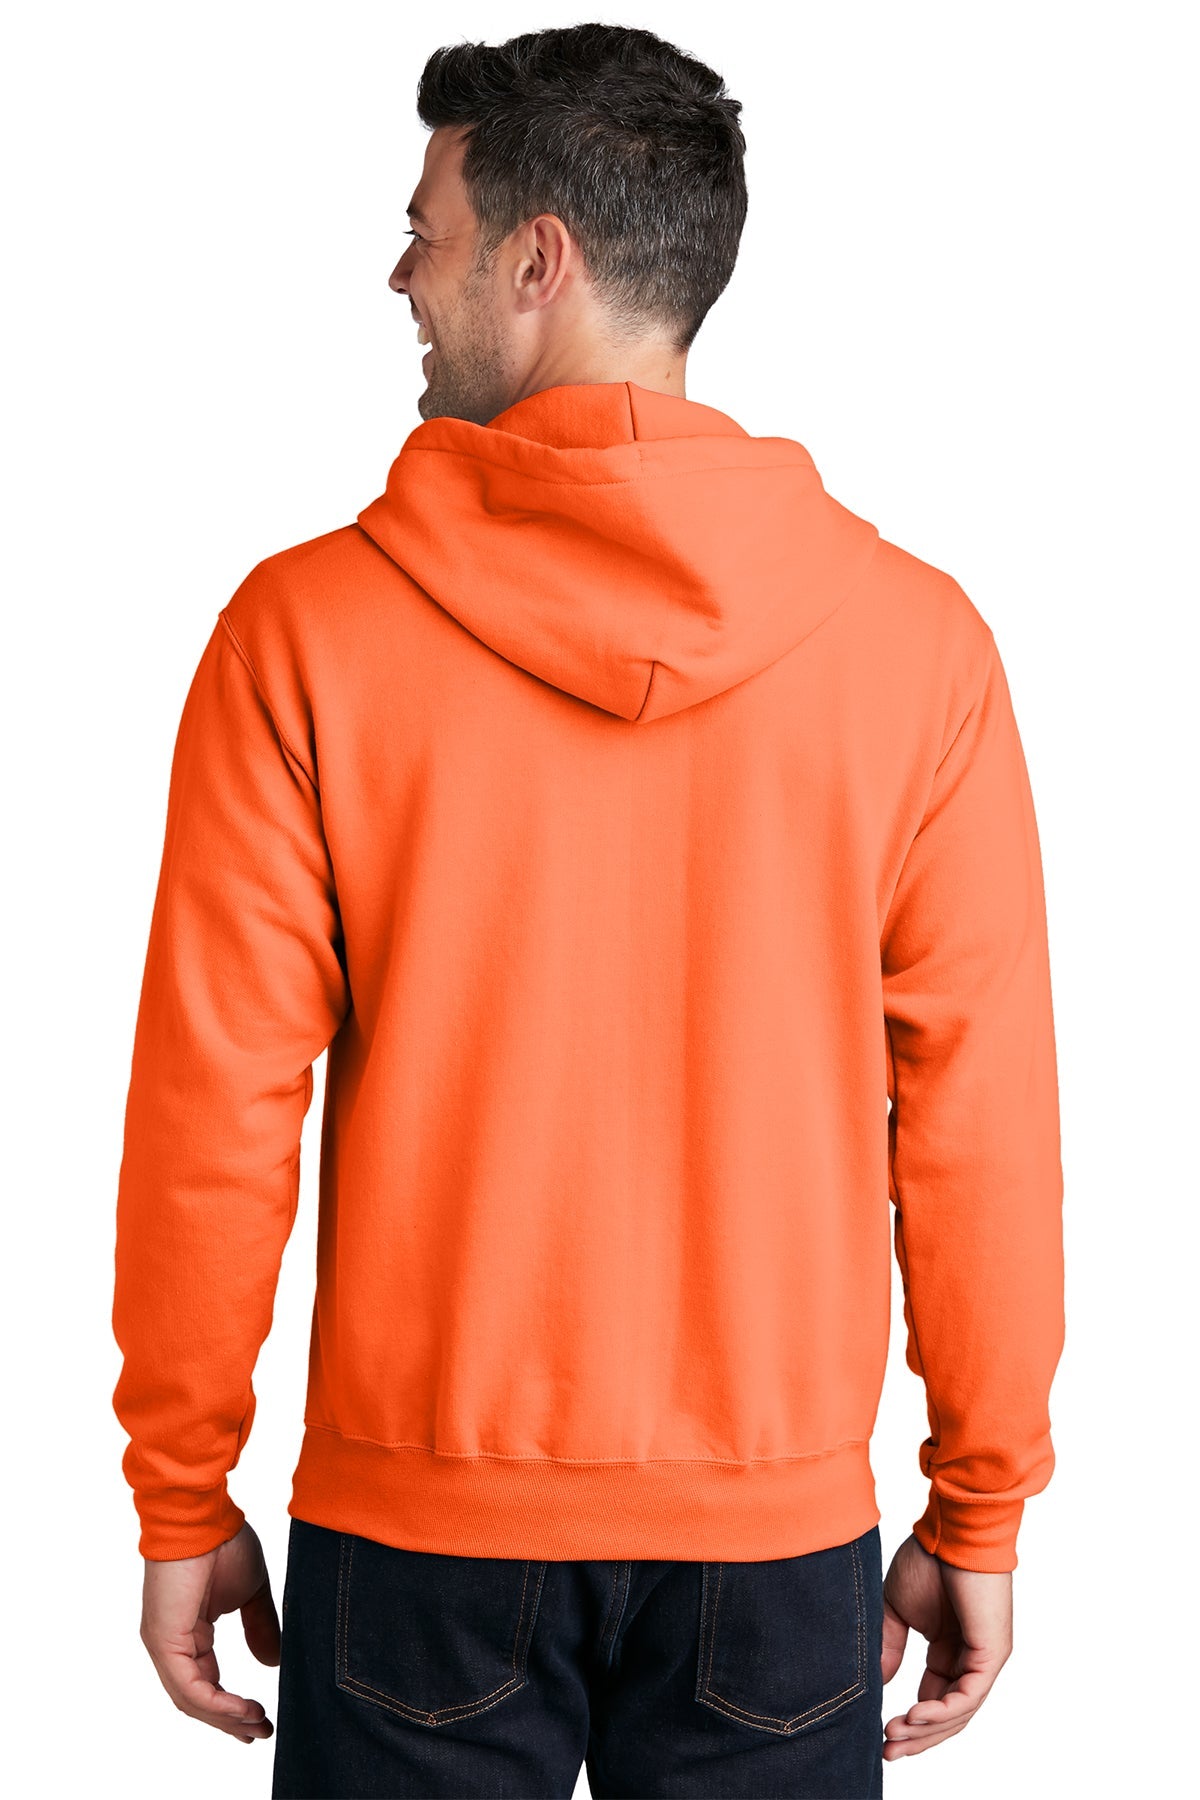 port & company_pc78zh _neon orange_company_logo_sweatshirts